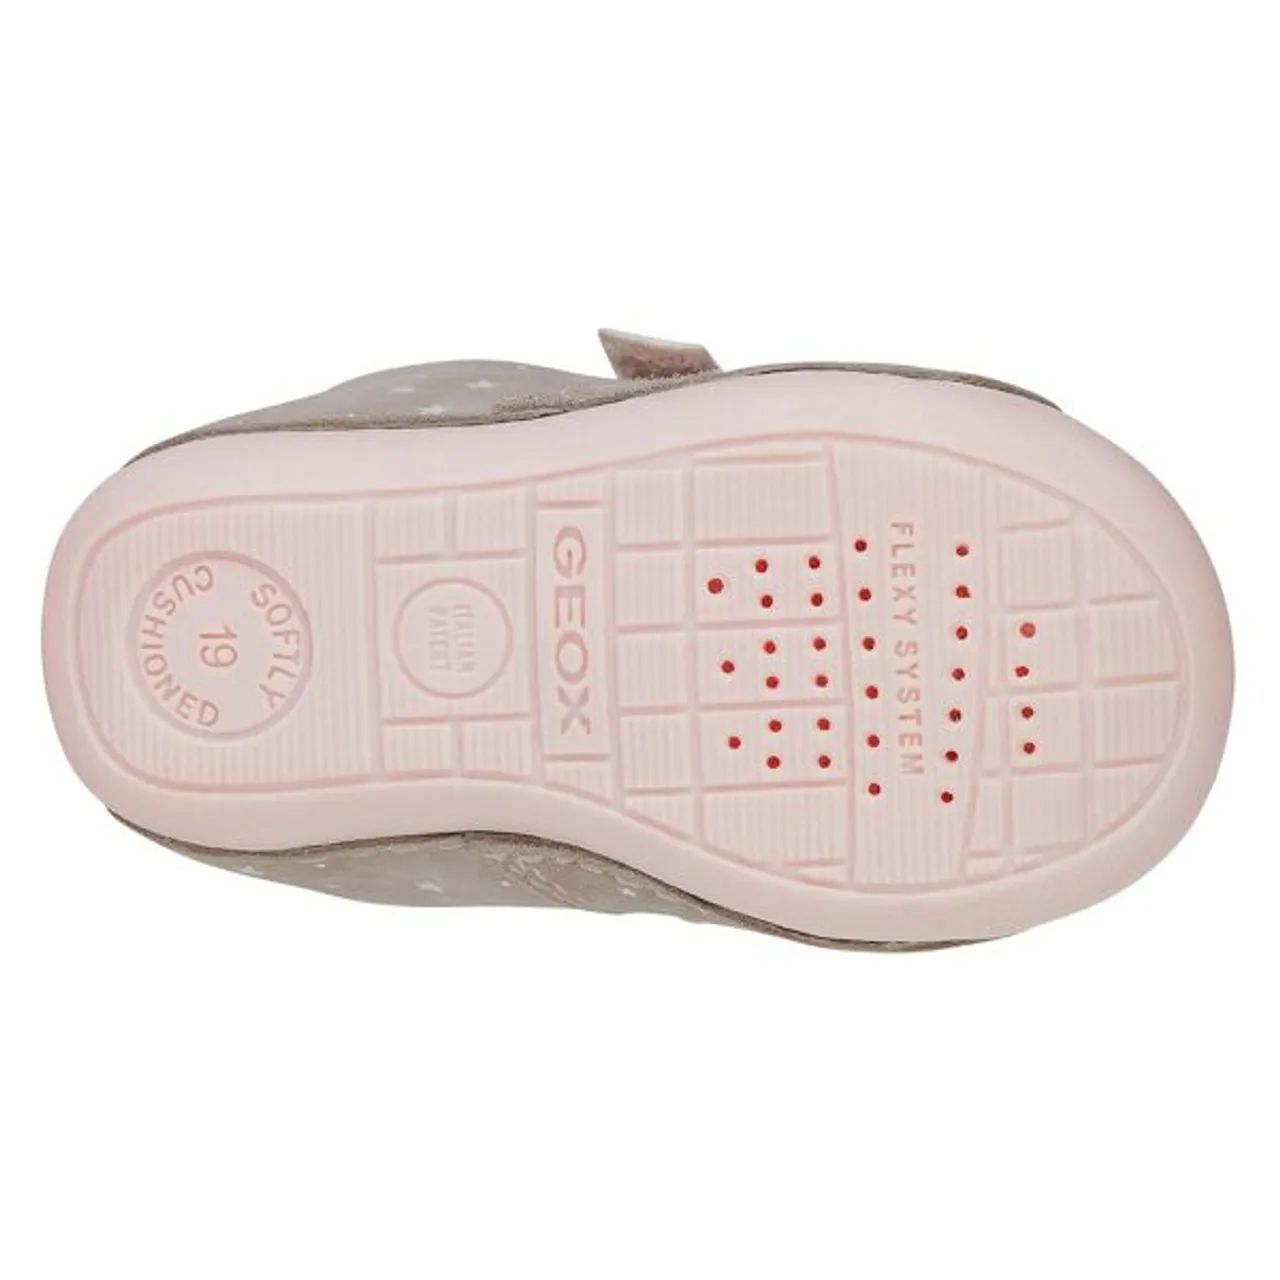 Lauflernschuh GEOX "B TUTIM B" Gr. 21, rosa (hellrosa, beige) Kinder Schuhe Lauflernschuhe